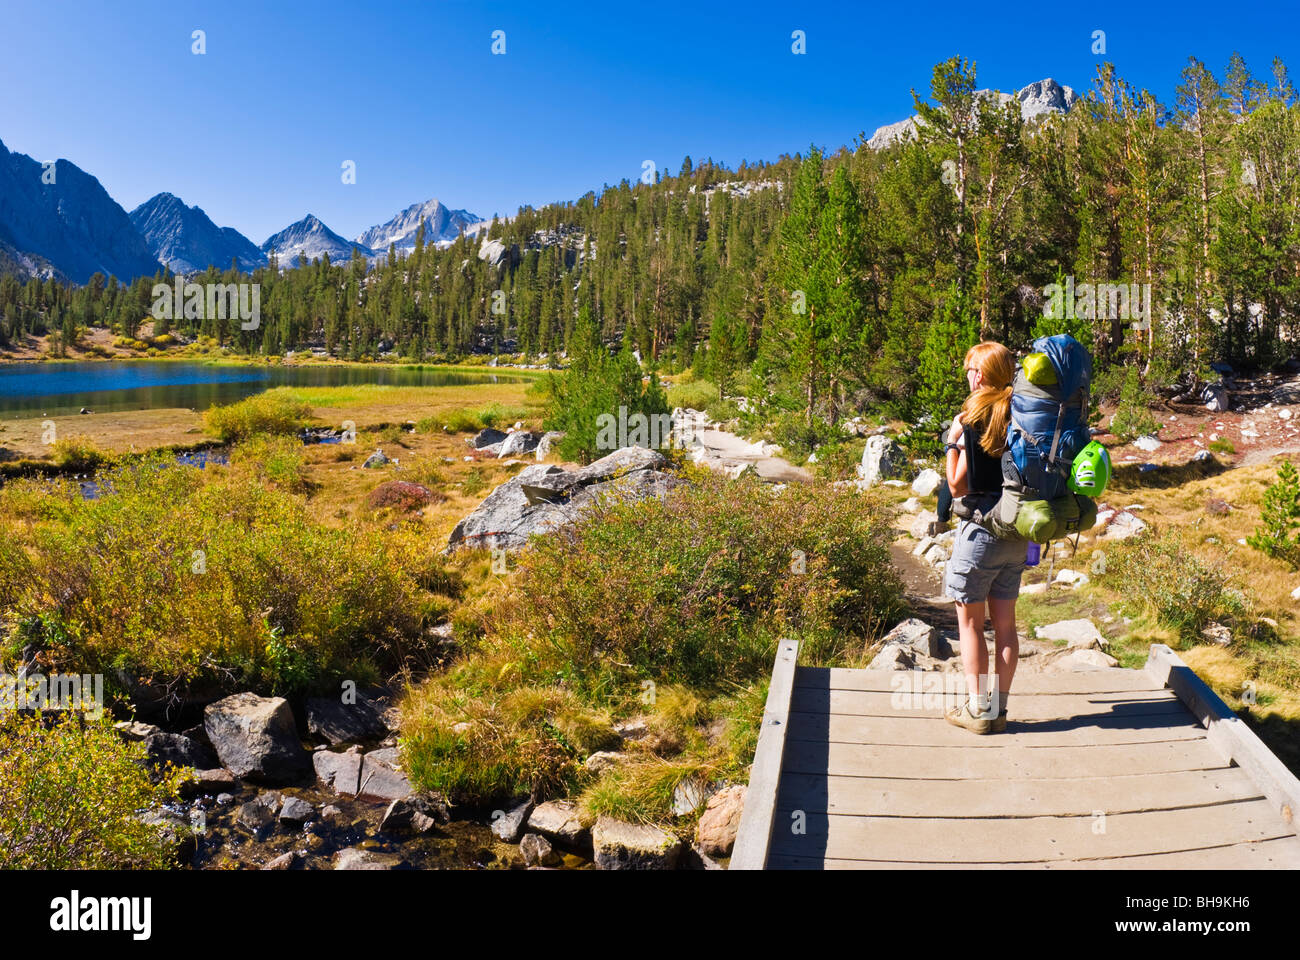 Backpackers in Little Lakes Valley, John Muir Wilderness, Sierra Nevada Mountains, California Stock Photo